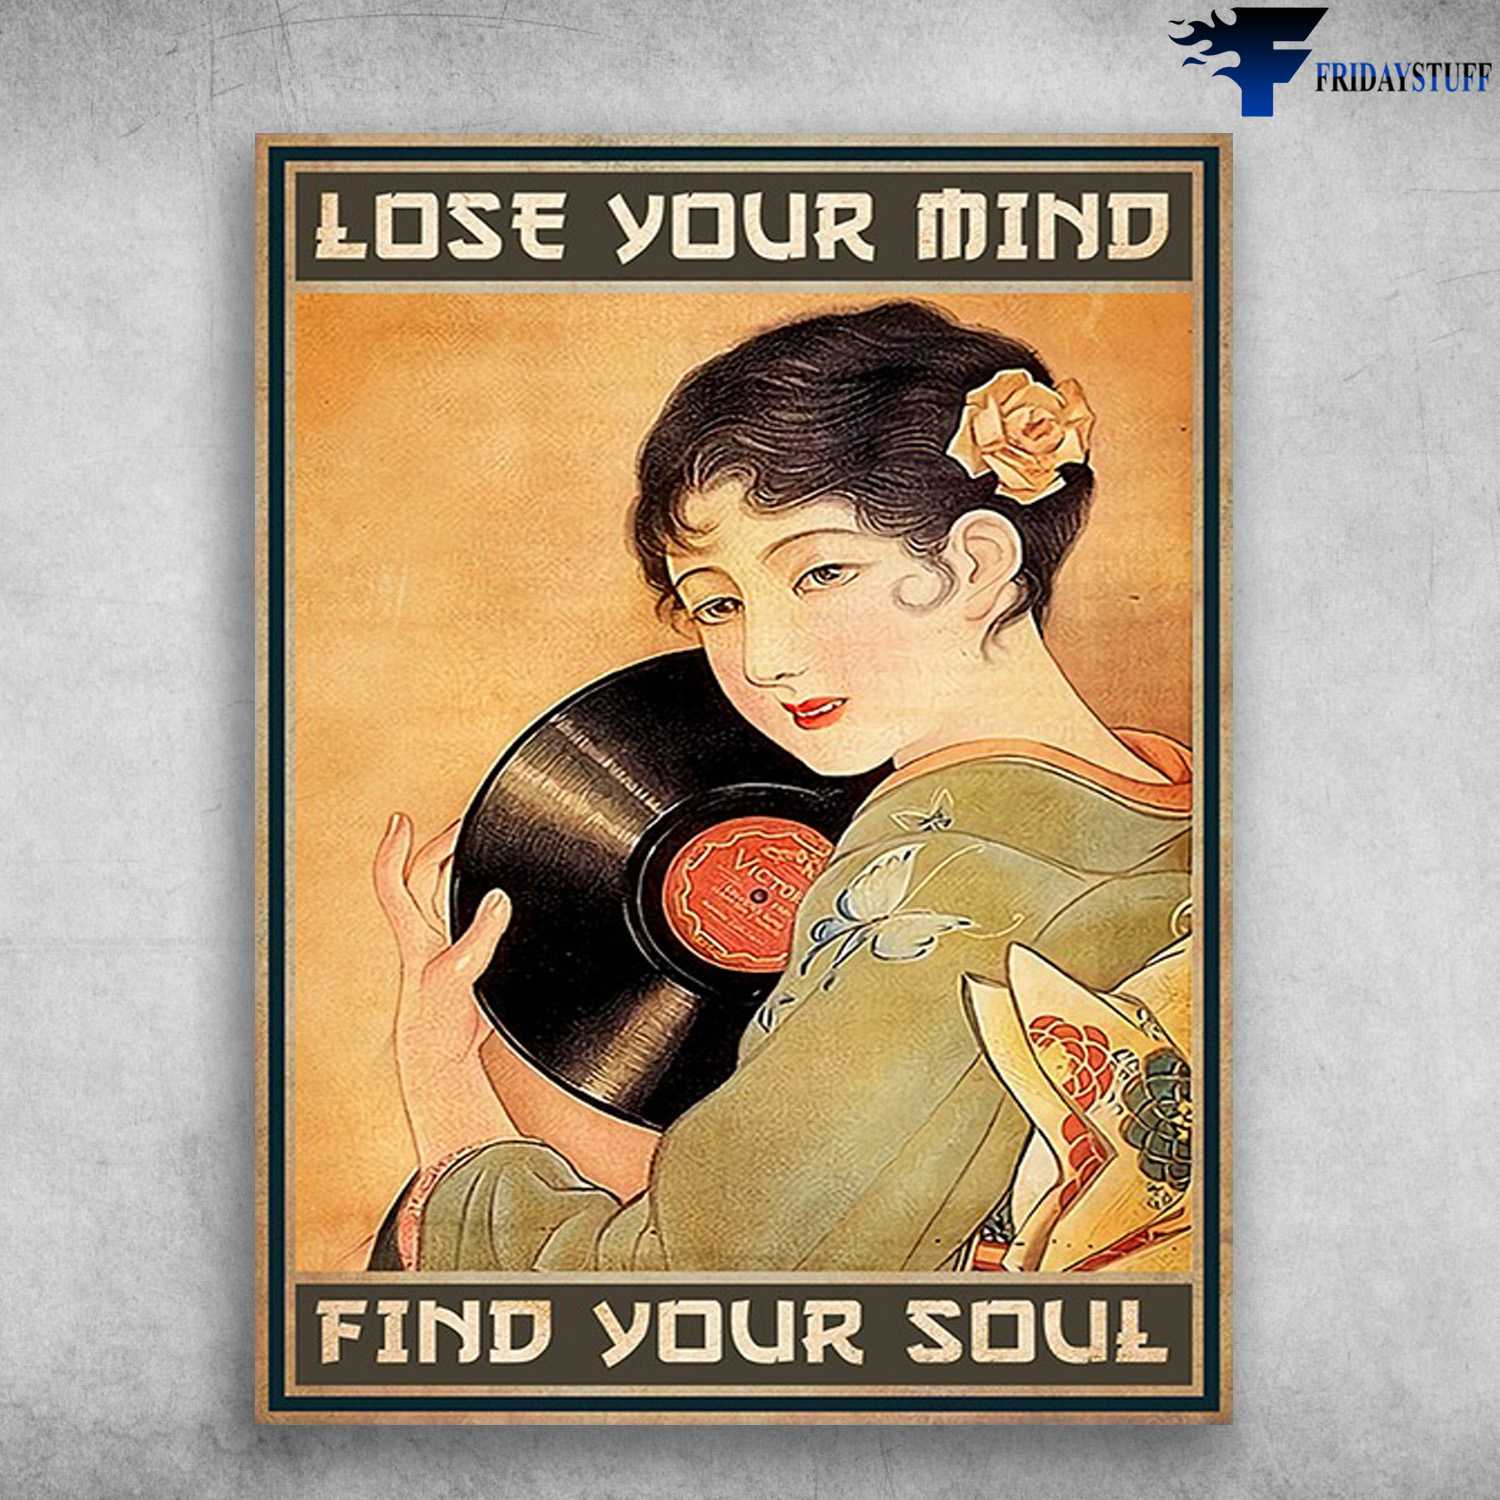 Japan Girl, Vinyl Record - Lose Your Mind, Find Your Soul